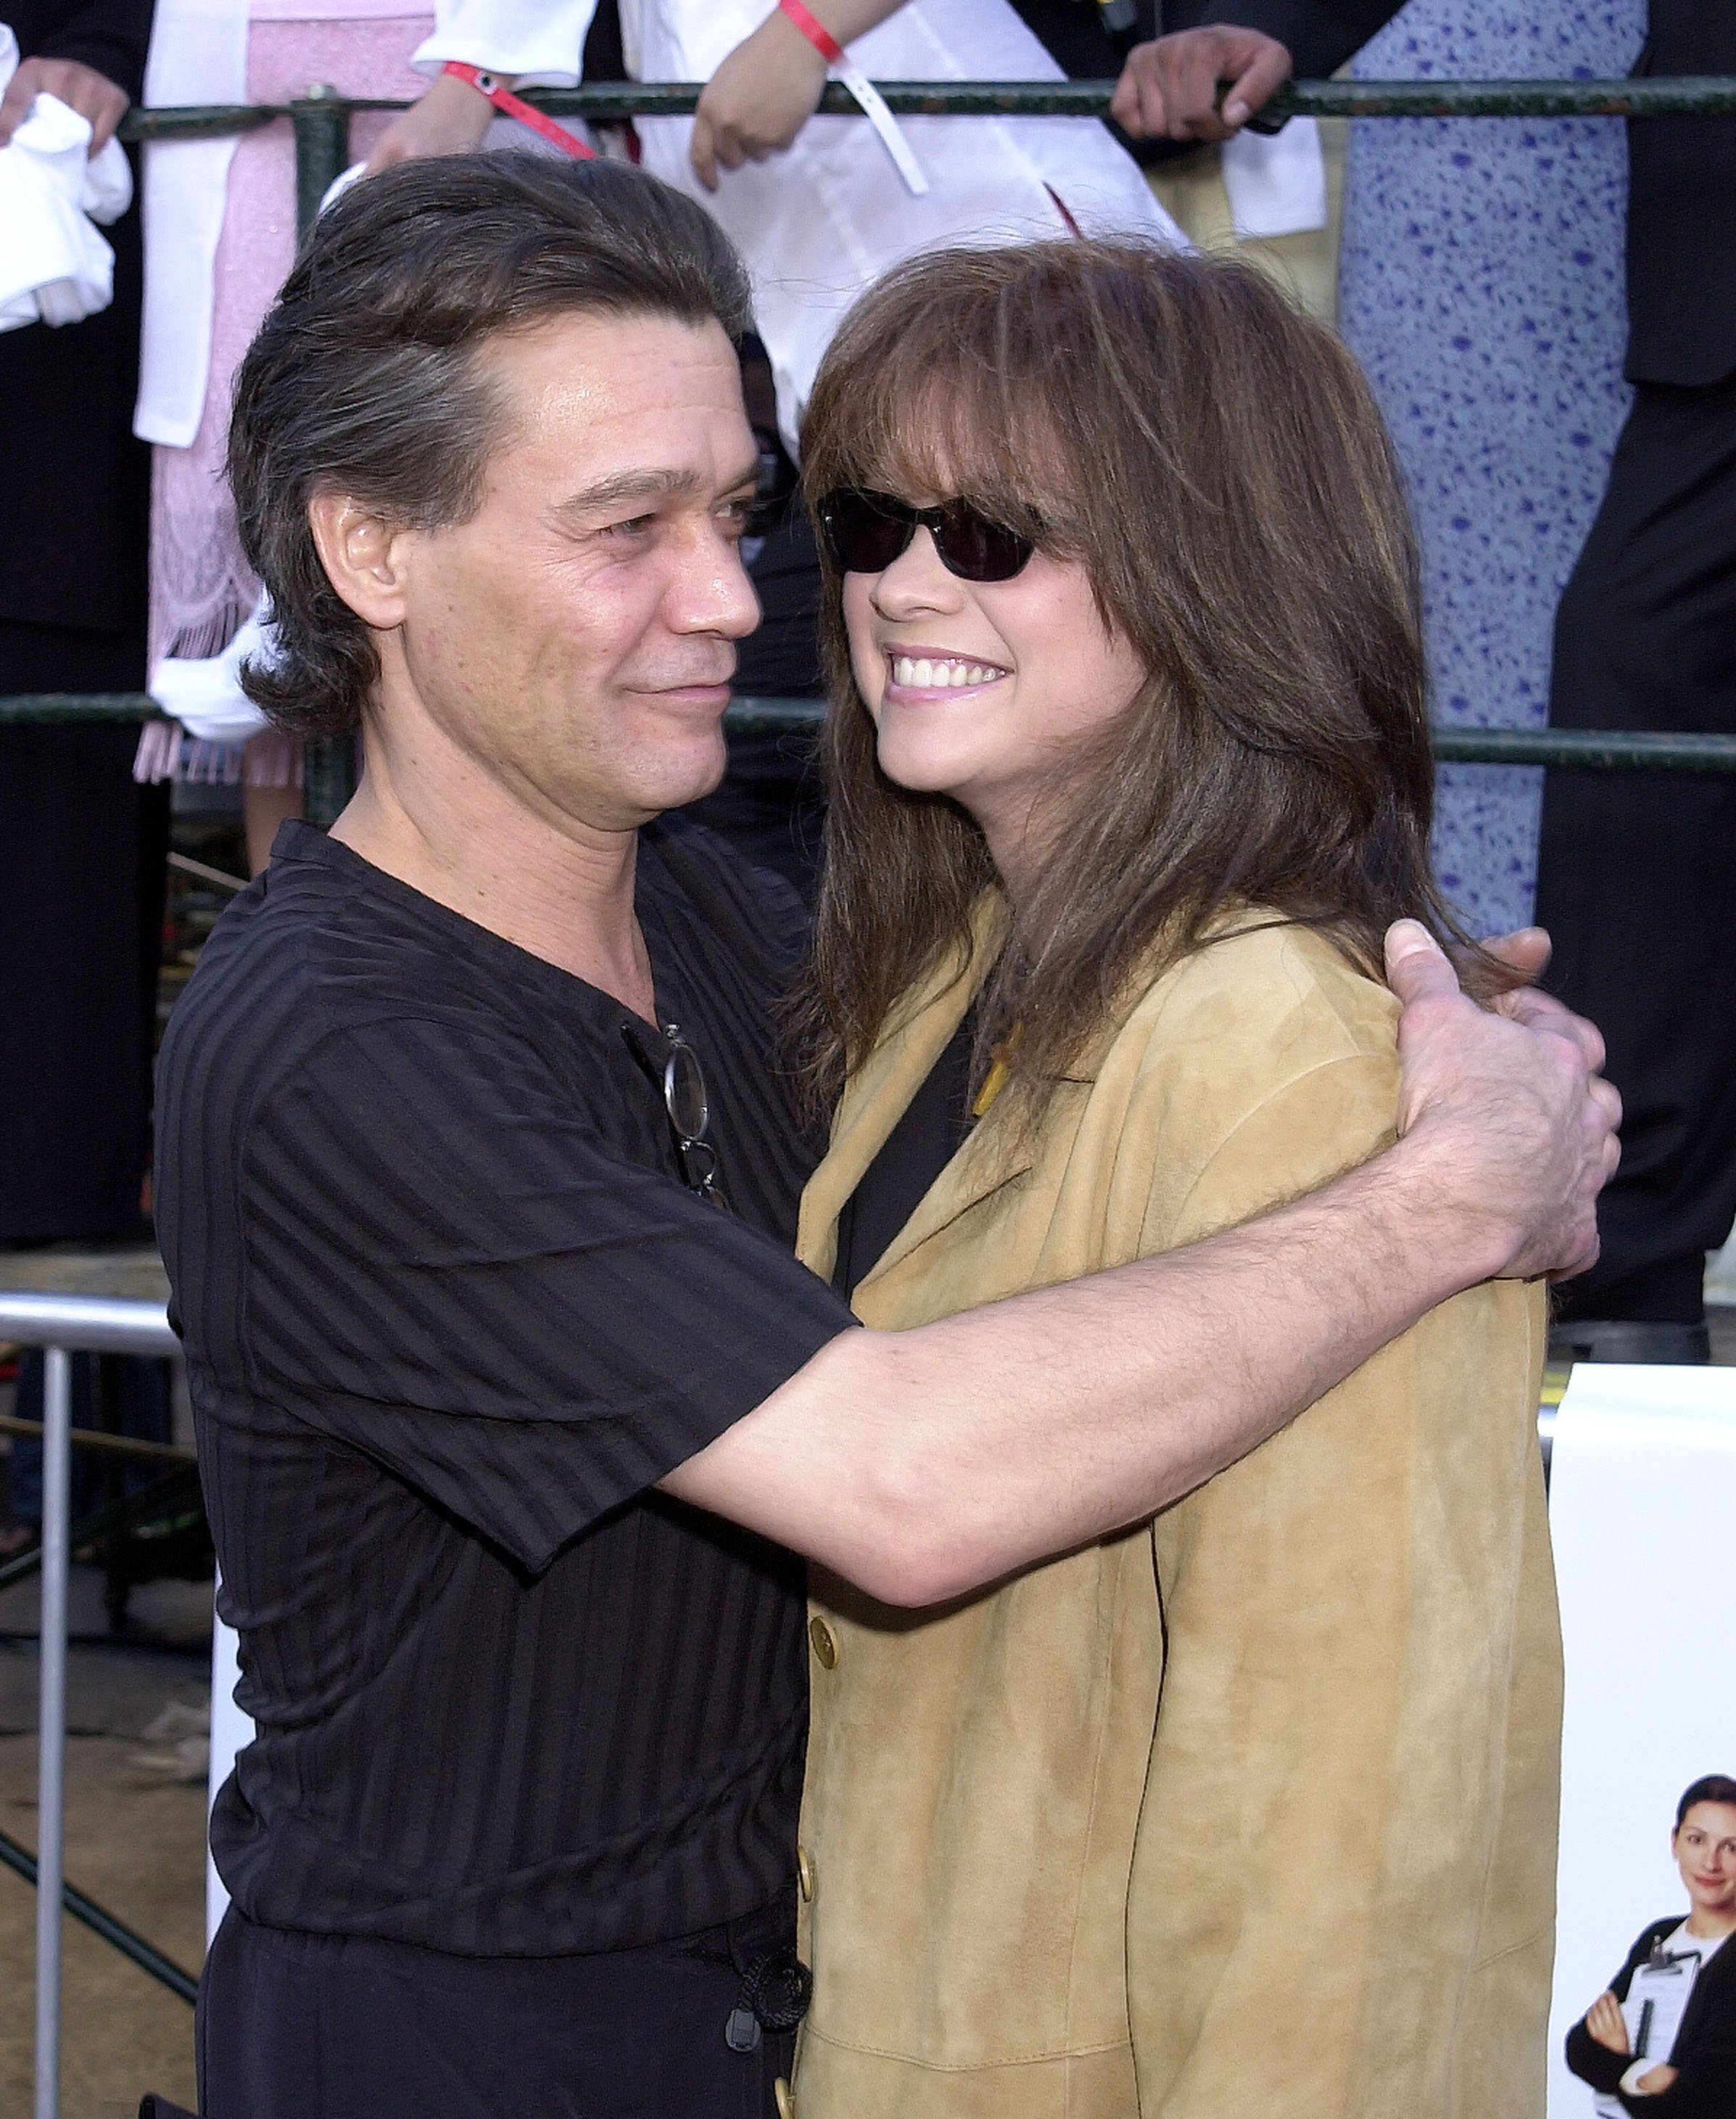 Eddie Van Halen and Valerie Bertinelli at the "America's Sweethearts" Los Angeles Premiere in Westwood, California on July 17, 2001 | Source: Getty Images